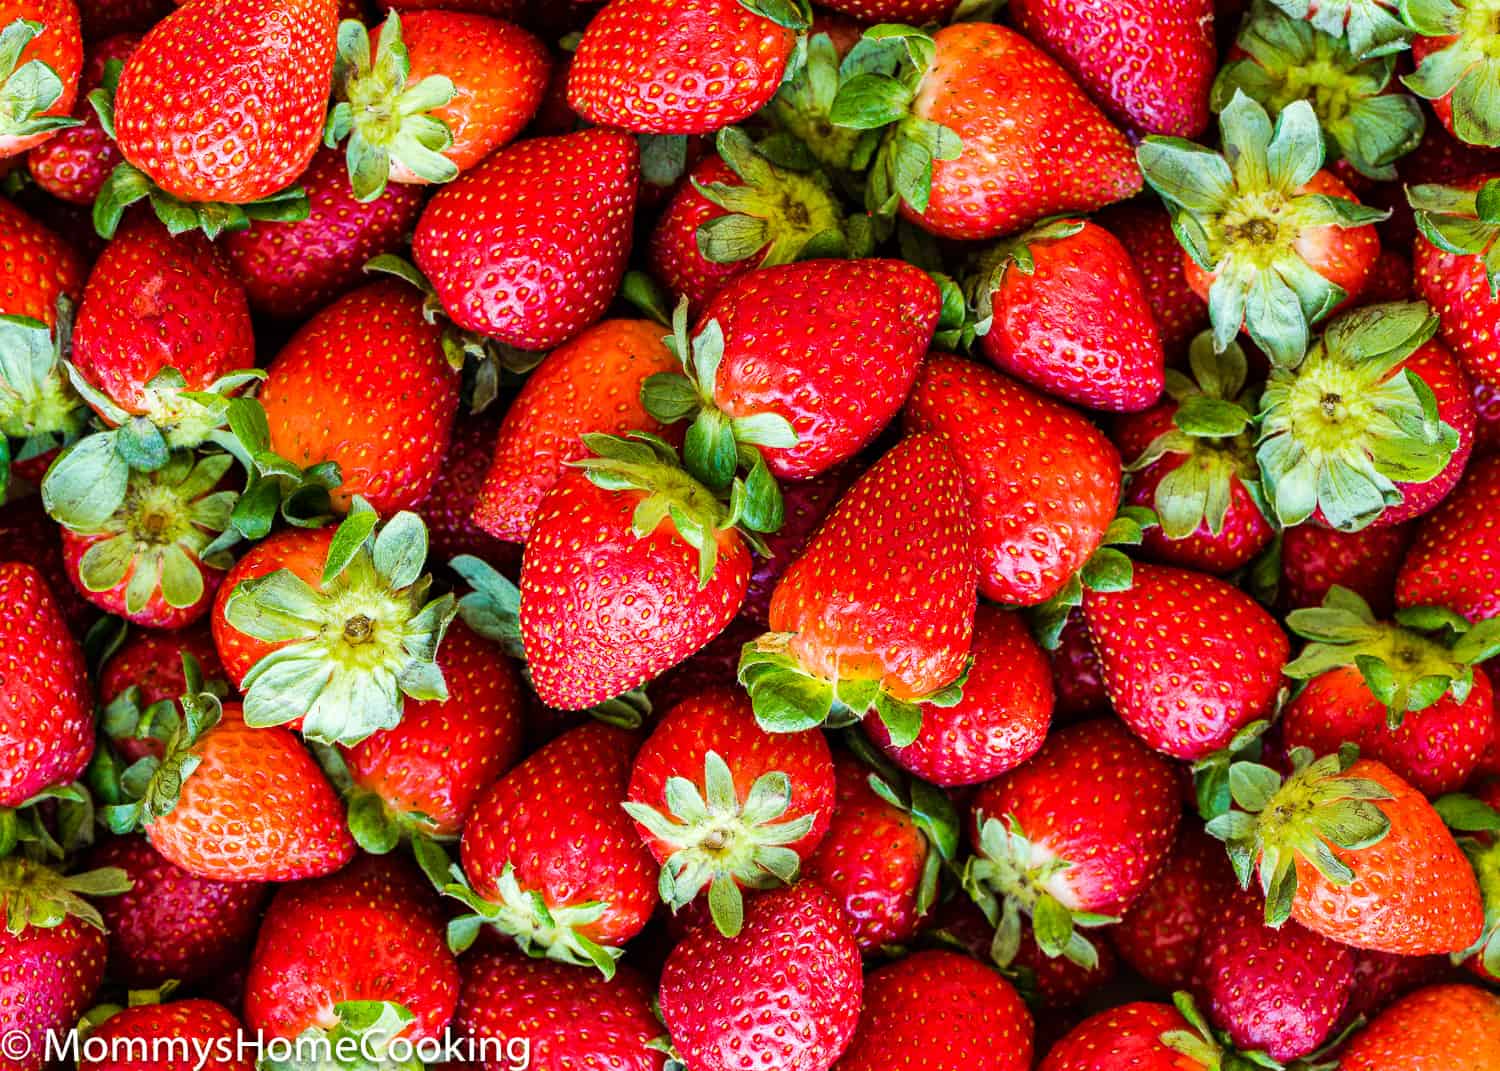 fresh, ripe and juicy strawberries.